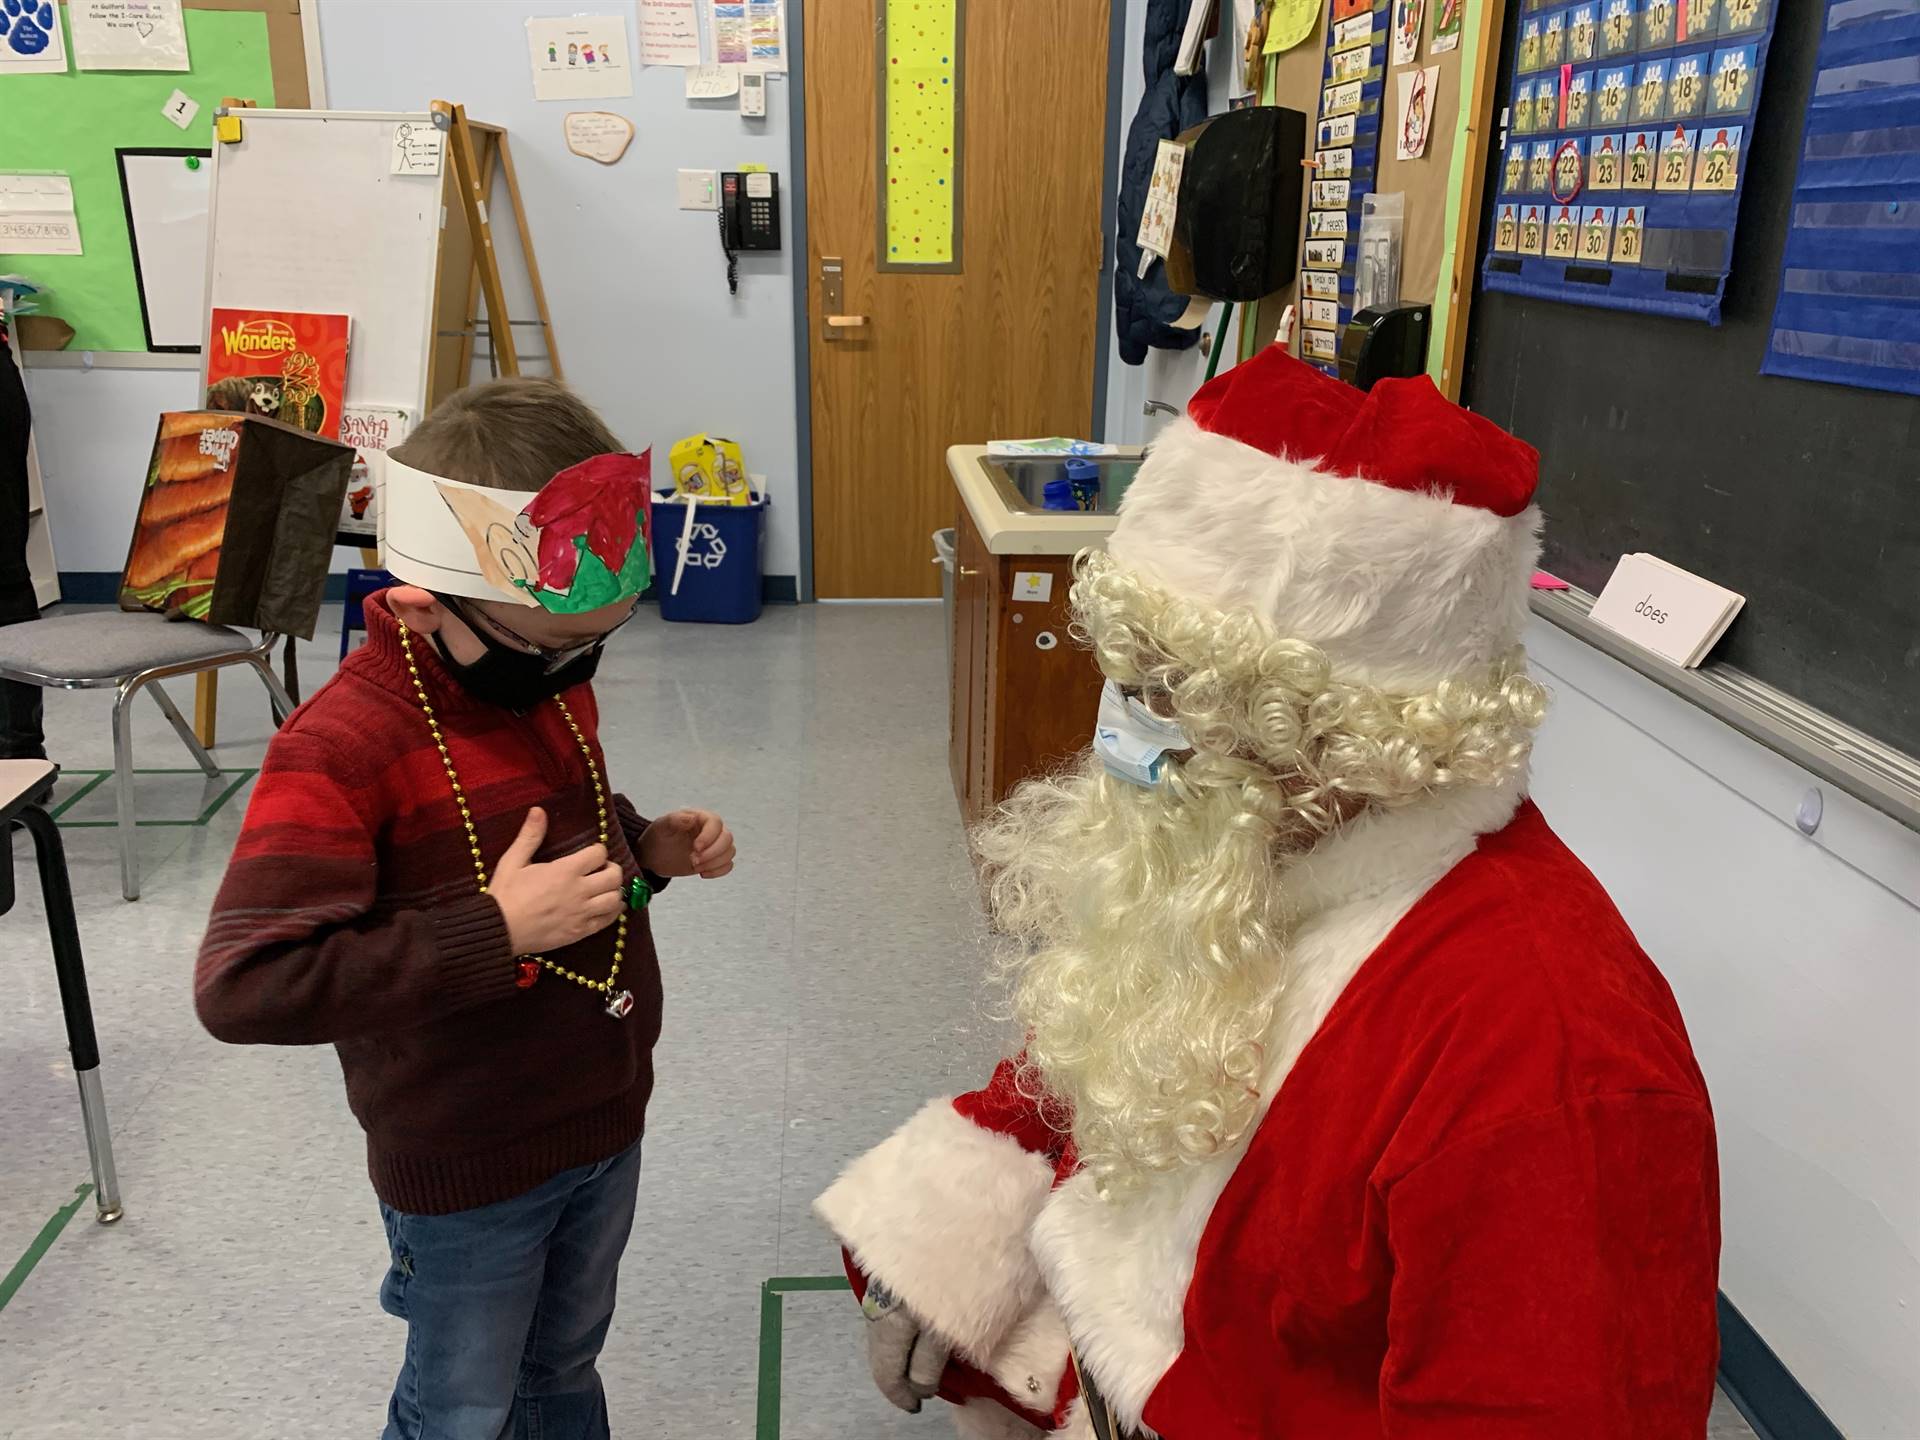 Santa loves the boy's jingle bells!